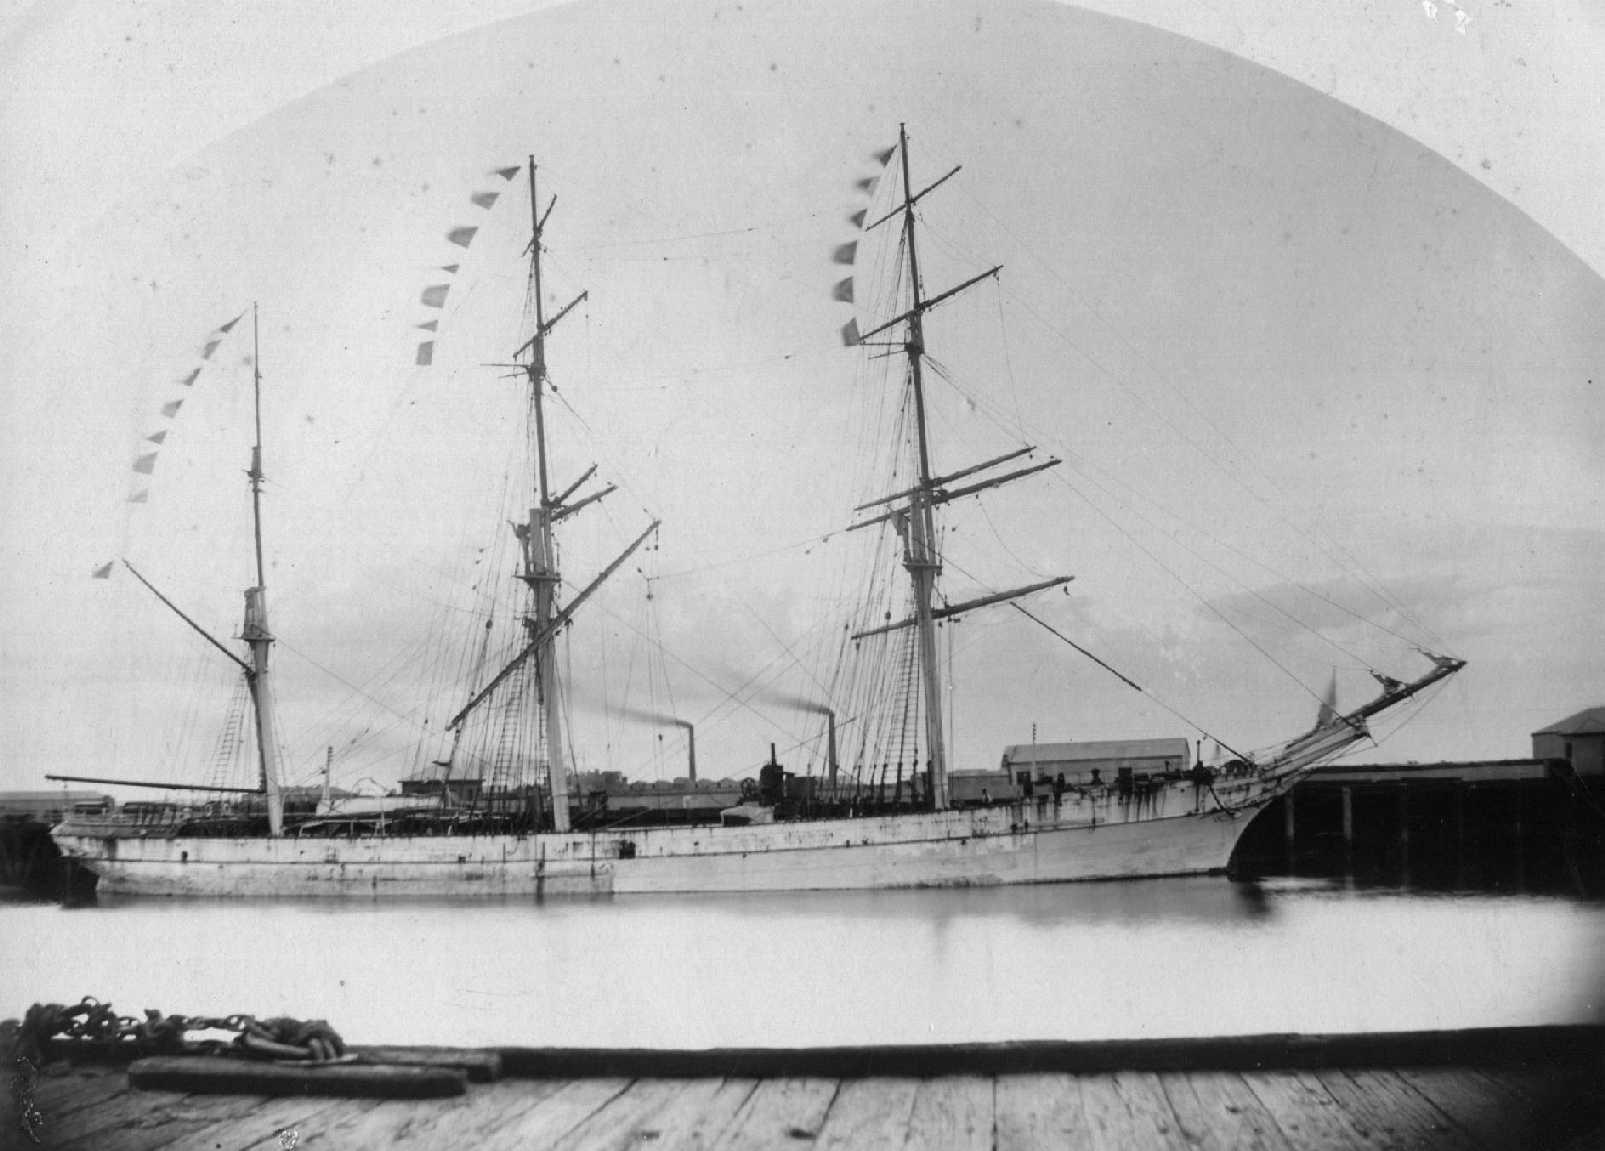 Image: Three masted composite ship